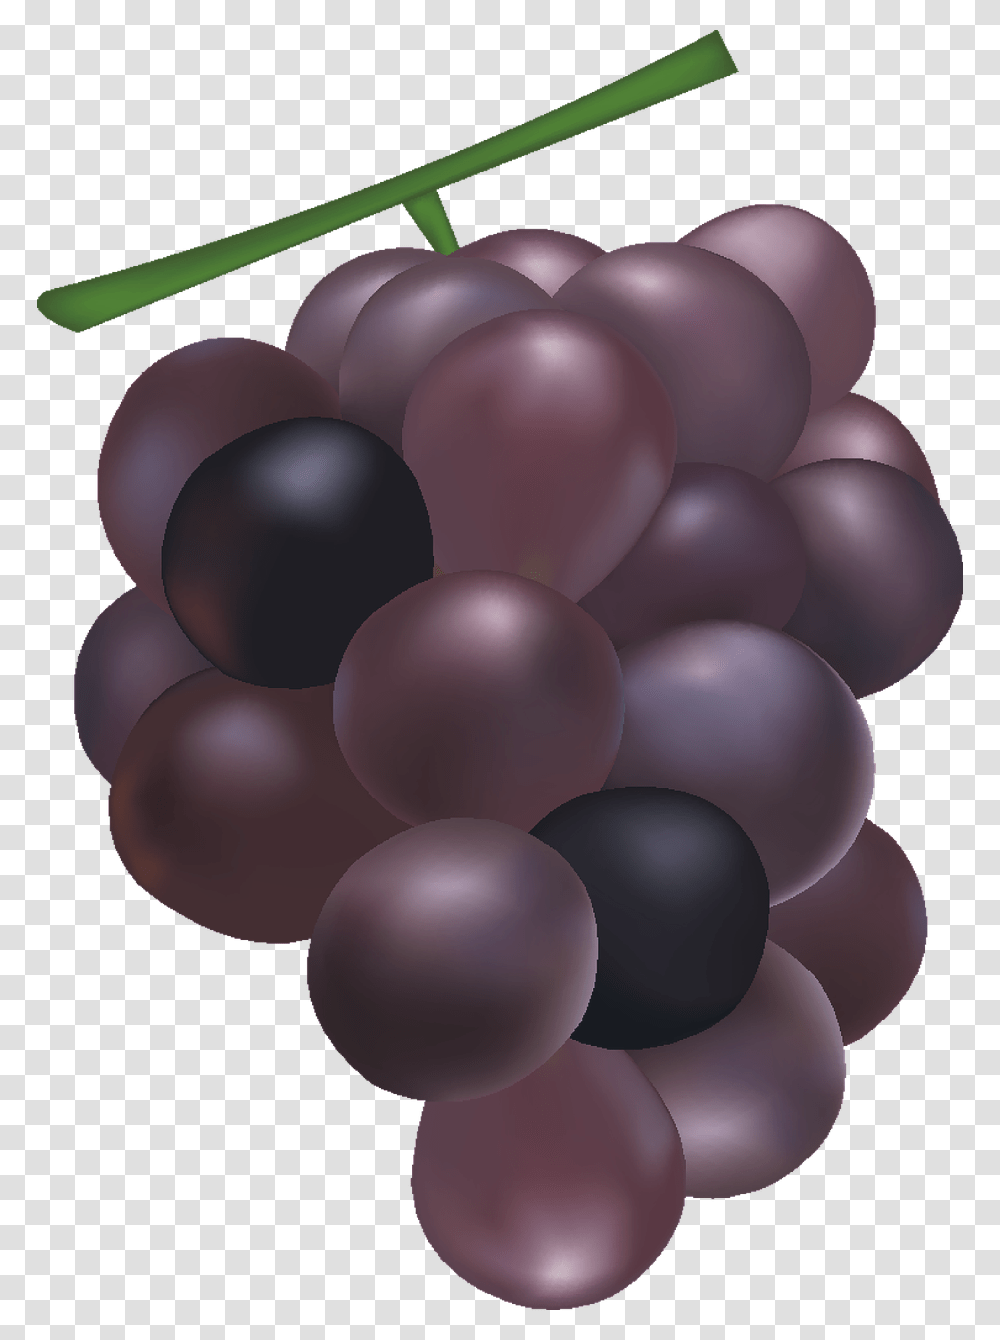 Grapes Mesh Free Vector Graphics Free Photo Grapes Mesh, Plant, Fruit, Food Transparent Png